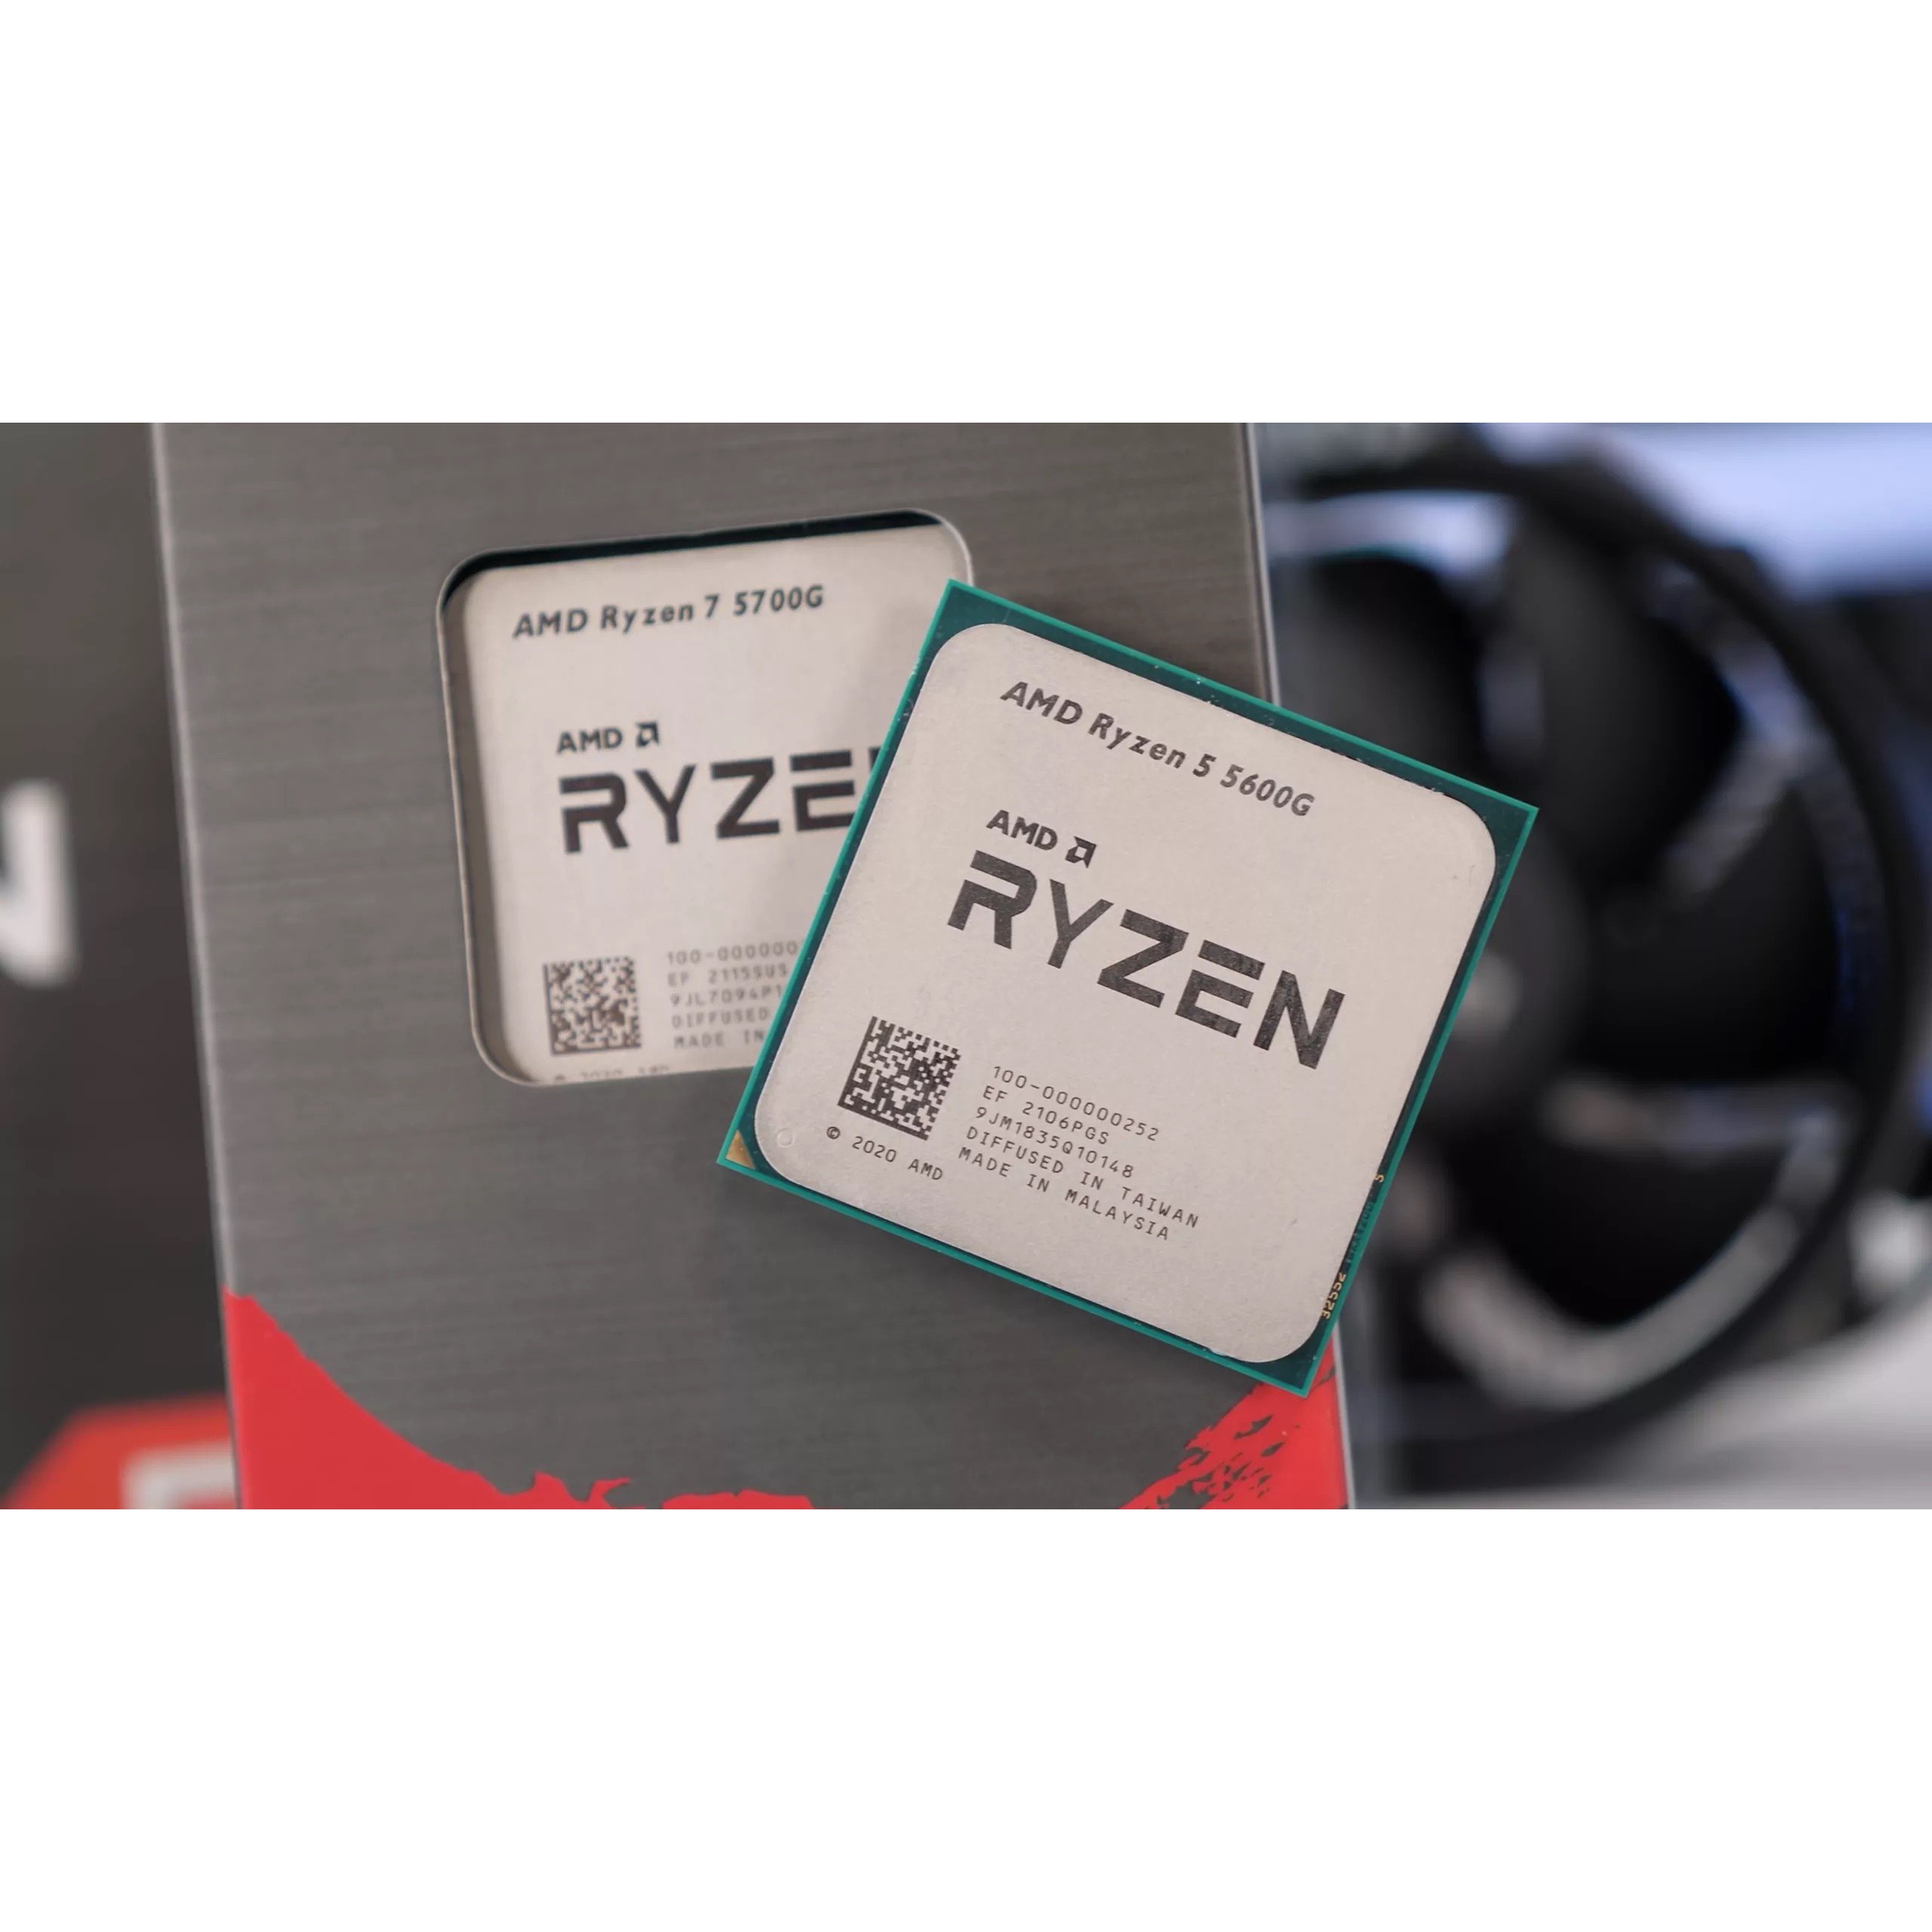 Amd ryzen 5600 g. Ryzen 3 5300g. Процессор AMD Ryzen 3 5300g. Ryzen 5 5600g. AMD 5600g OEM.